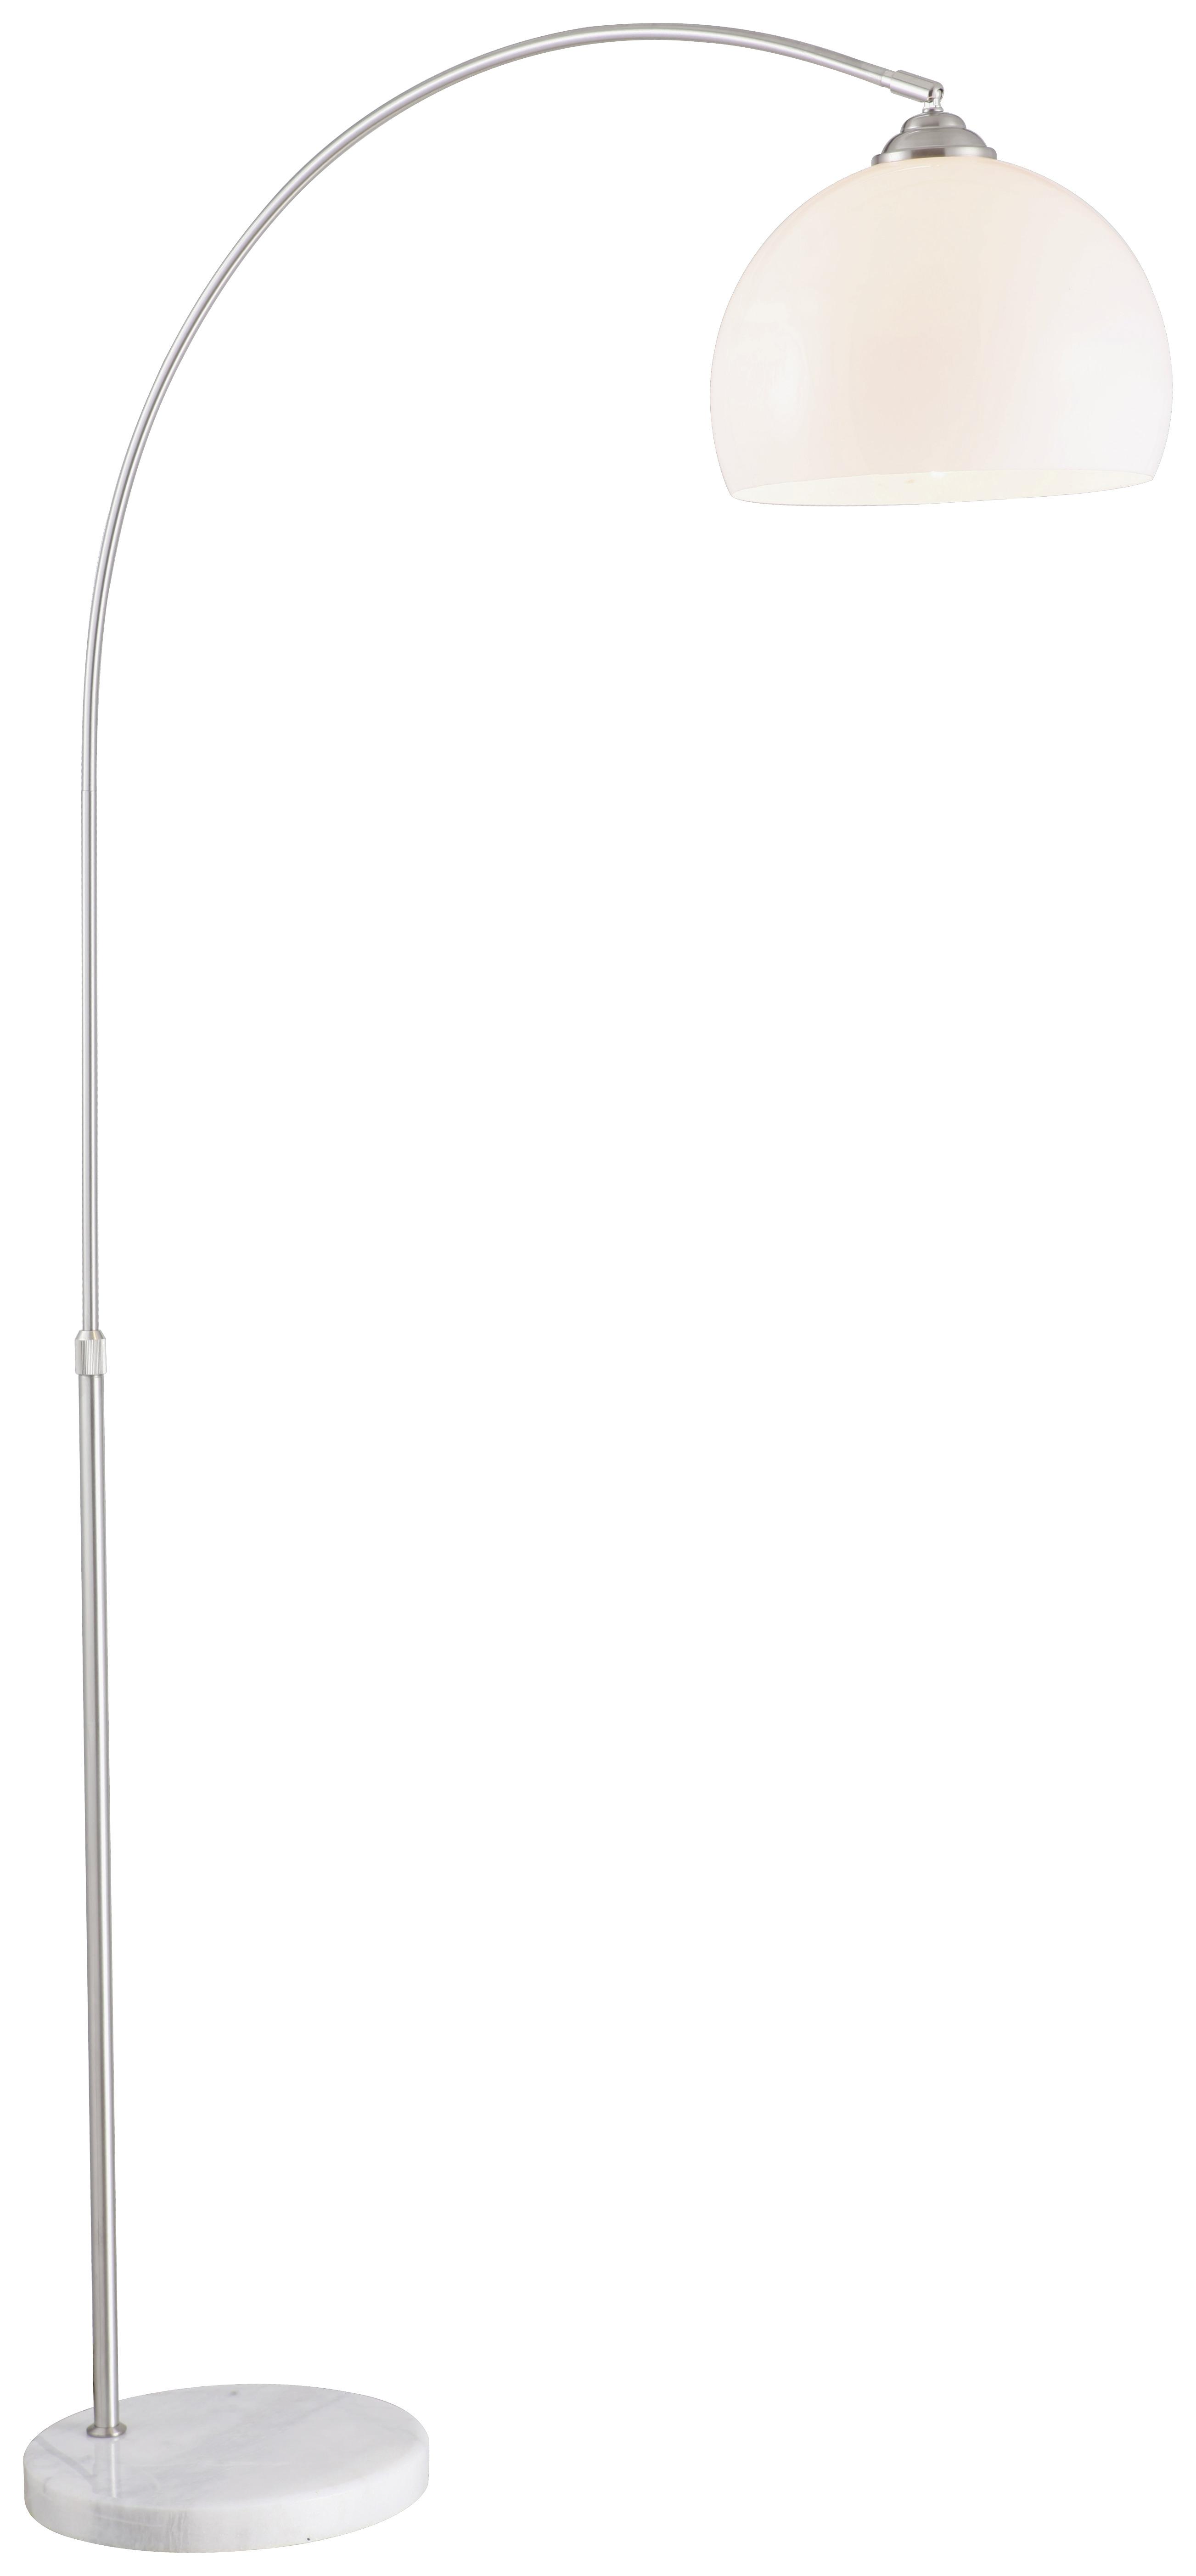 Stojací Lampa Raman V:141-196cm, 40 Watt - bílá/barvy niklu, Moderní, kov/plast (30/141-196cm) - Modern Living